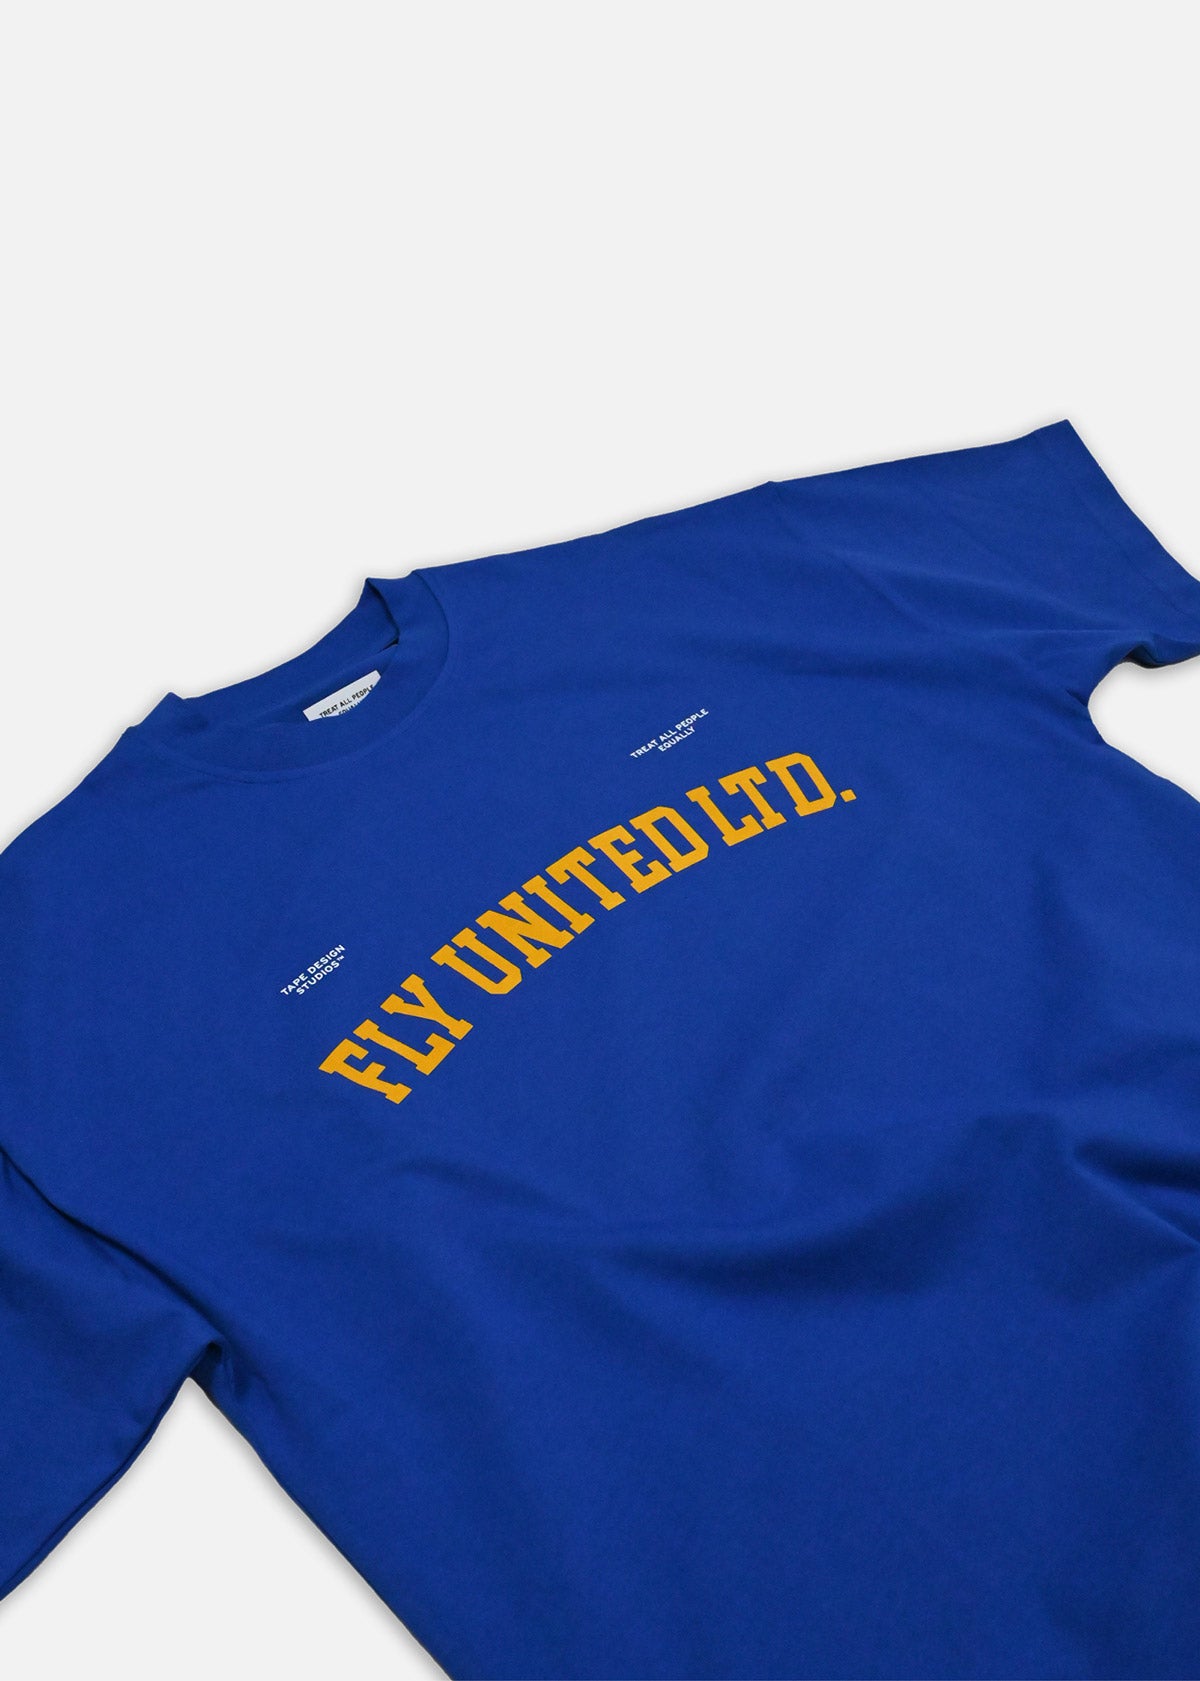 Fly United LTD. T-Shirt